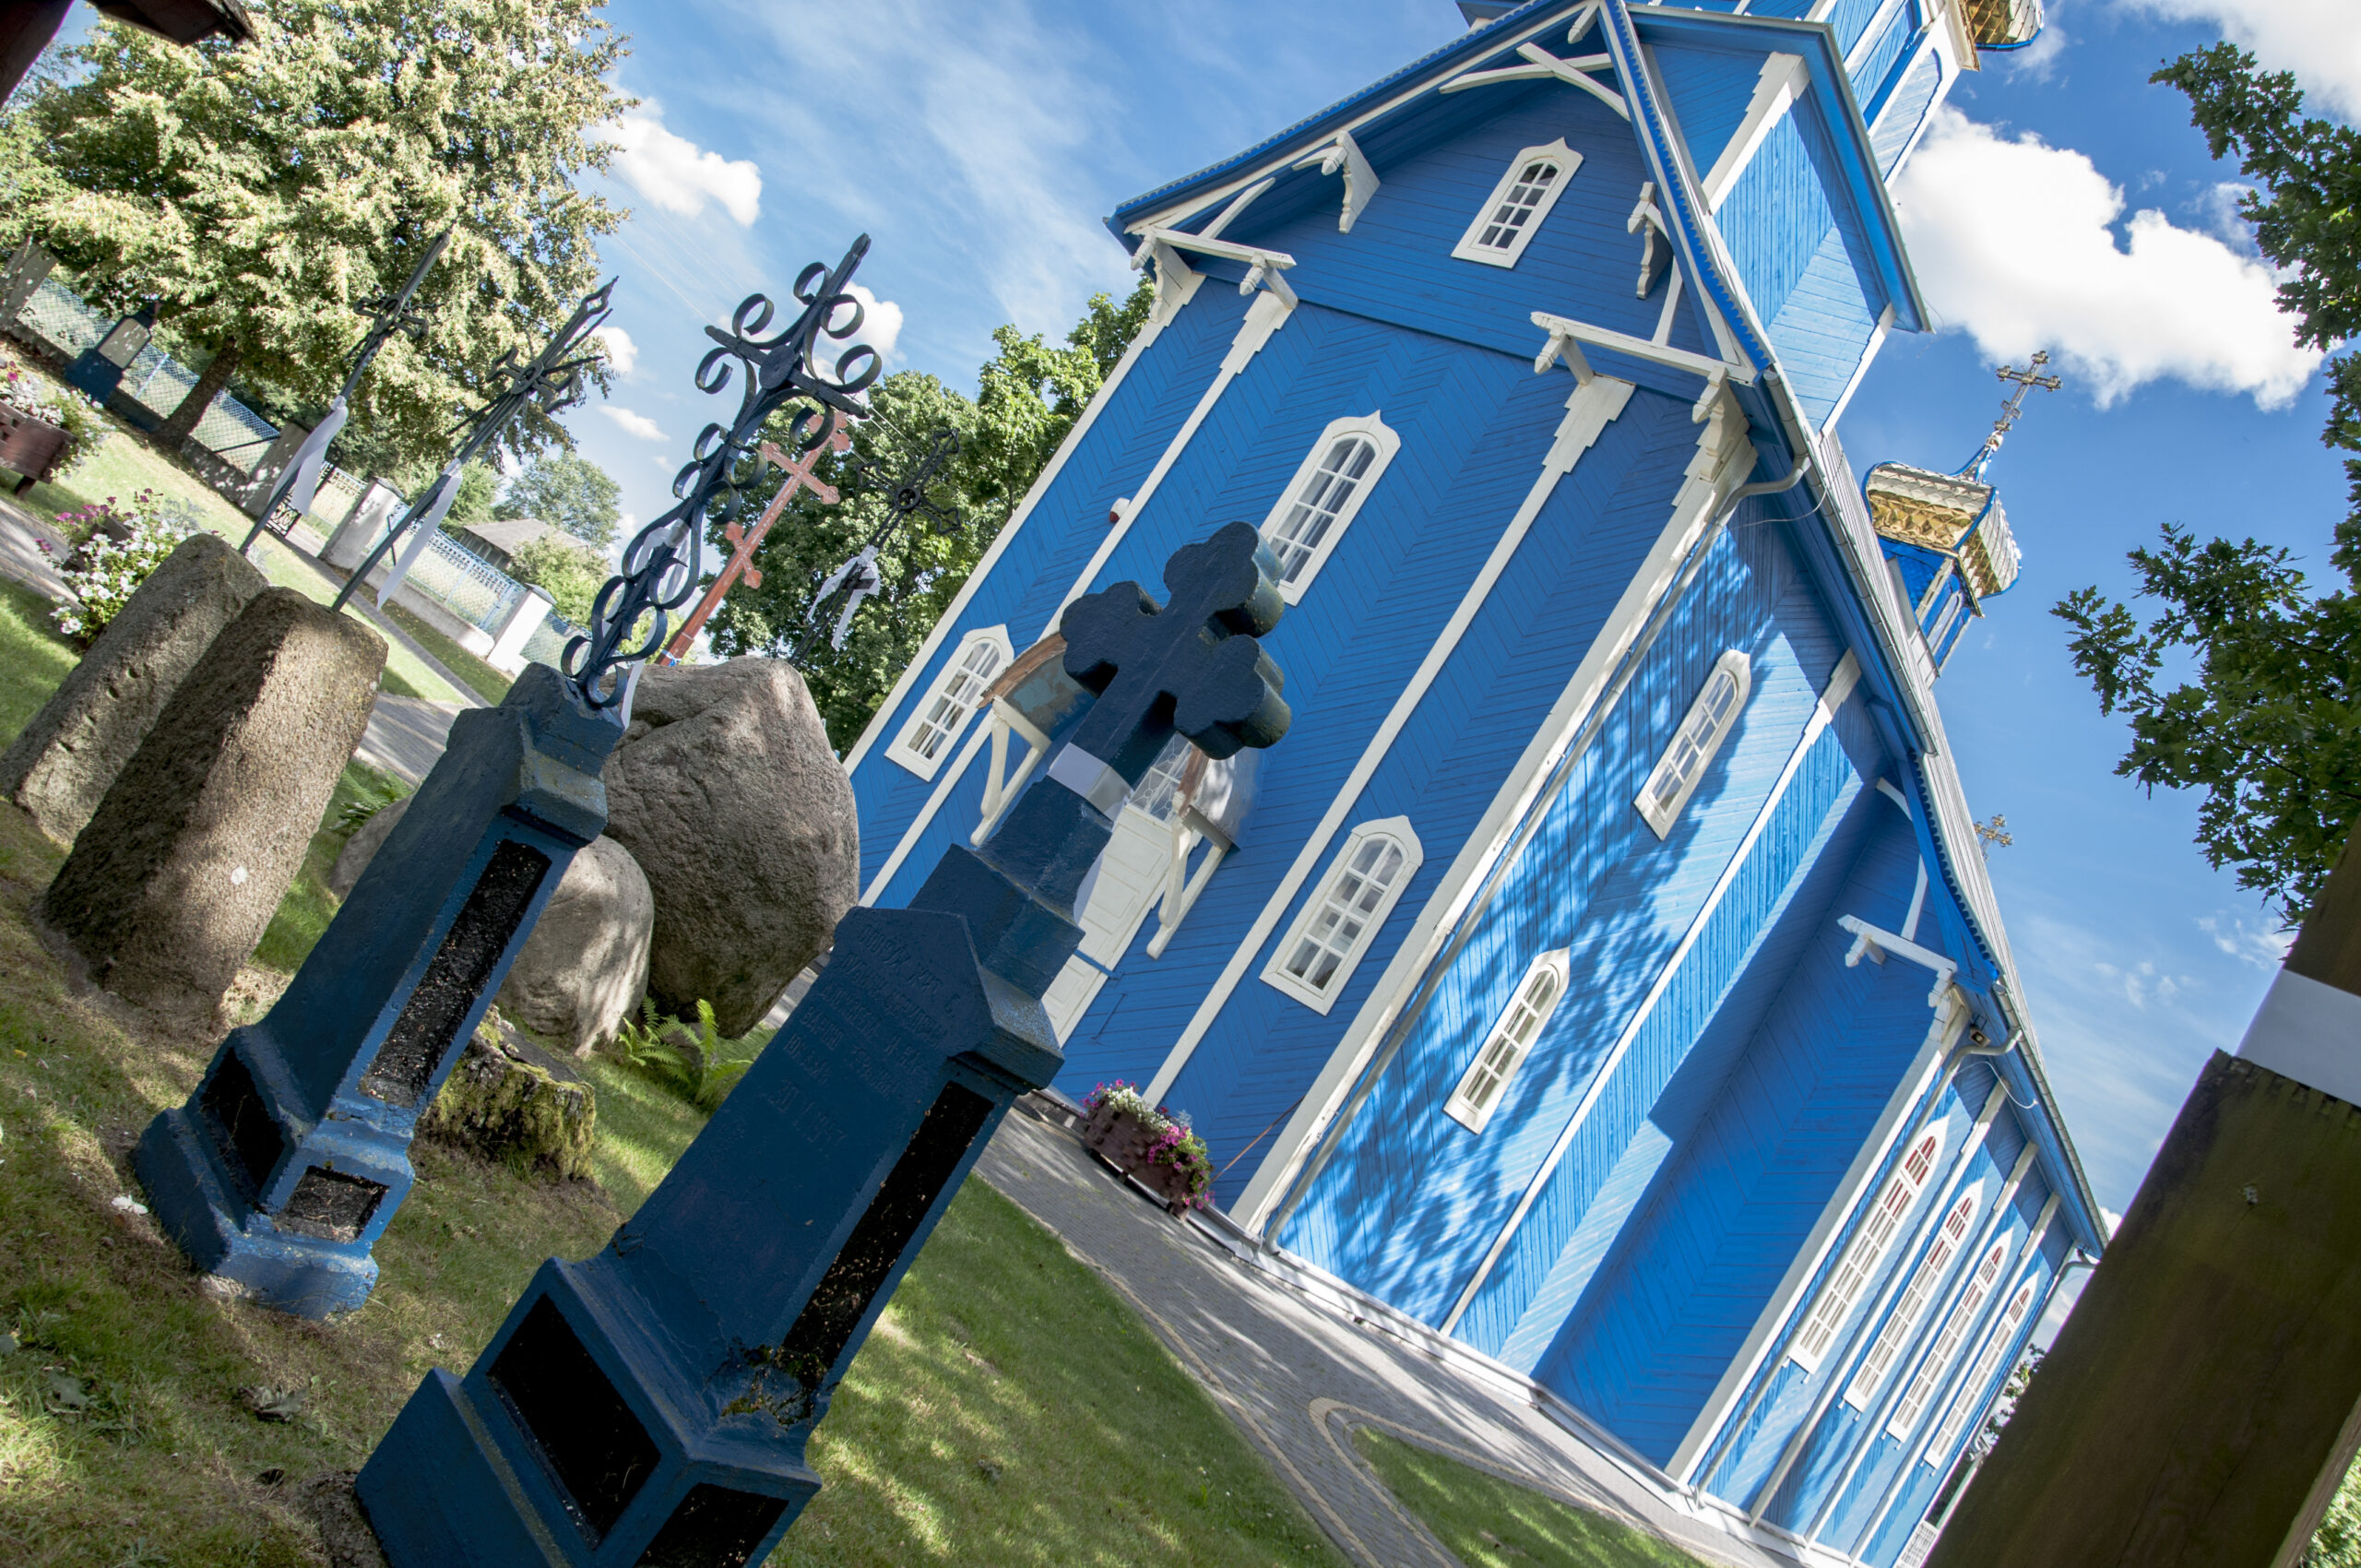 Dubicze Cerkiewne cerkiew niebieska